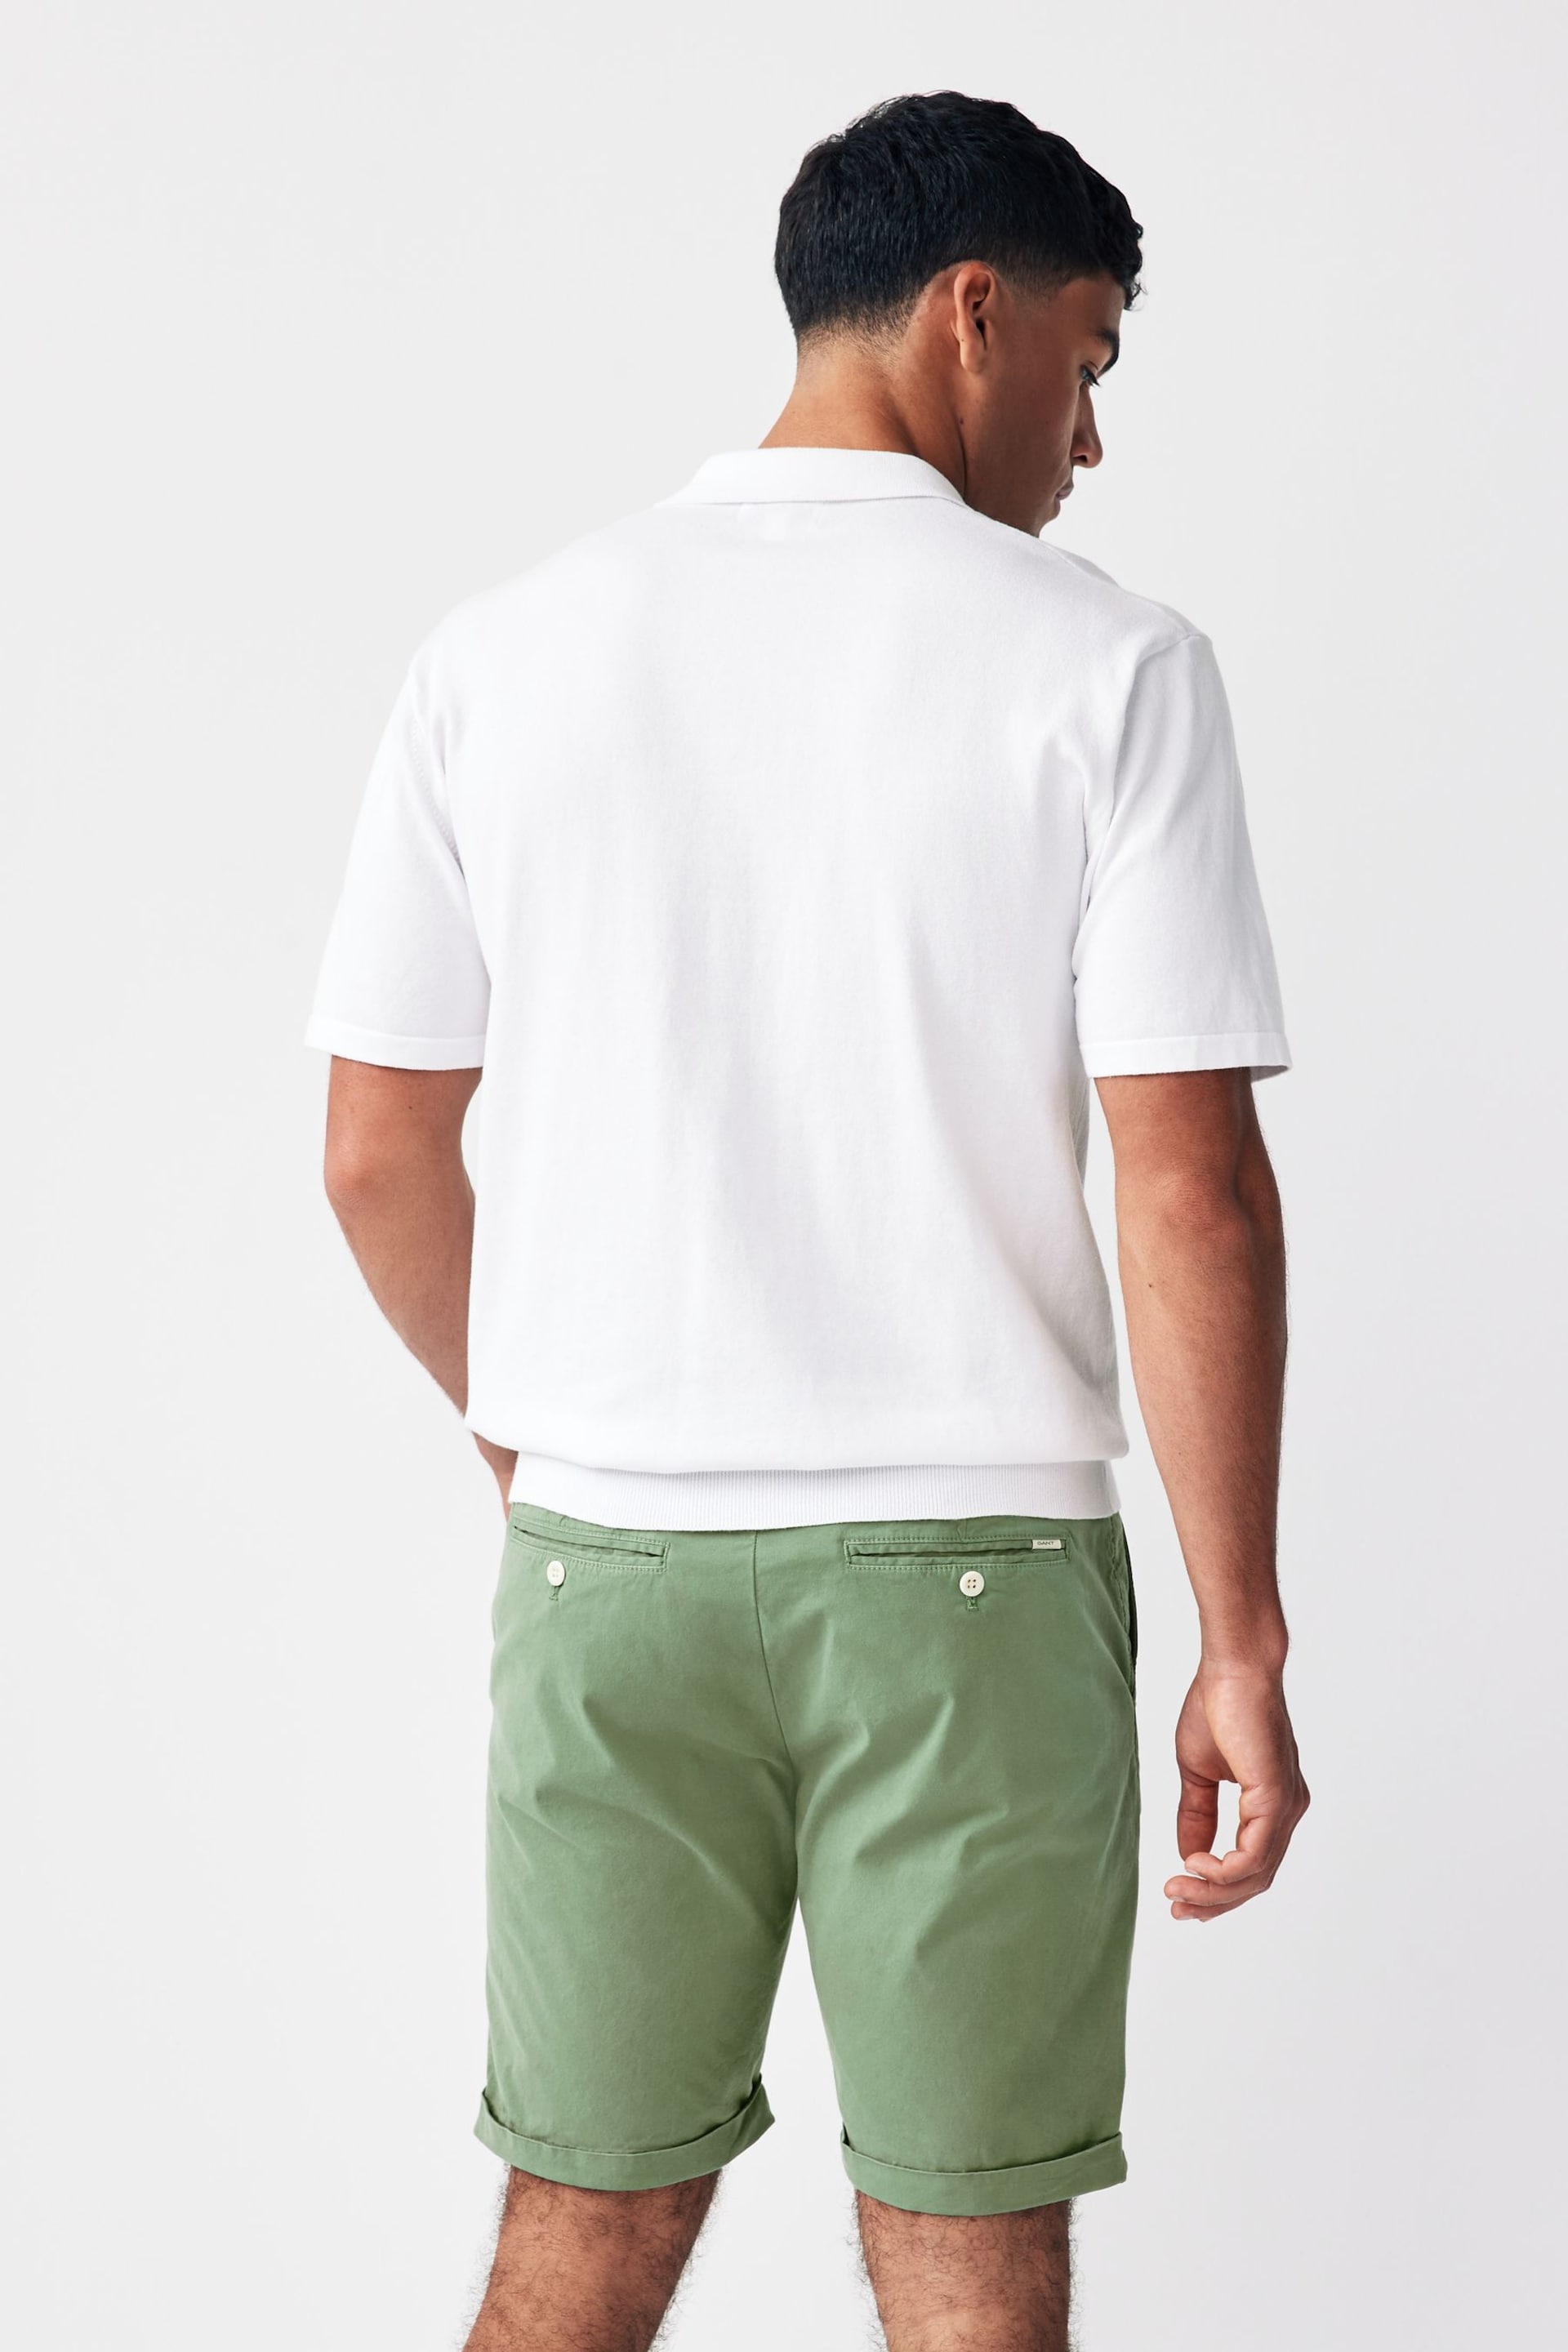 GANT Green Regular Fit Sunfaded Cotton Twill Shorts - Image 2 of 5